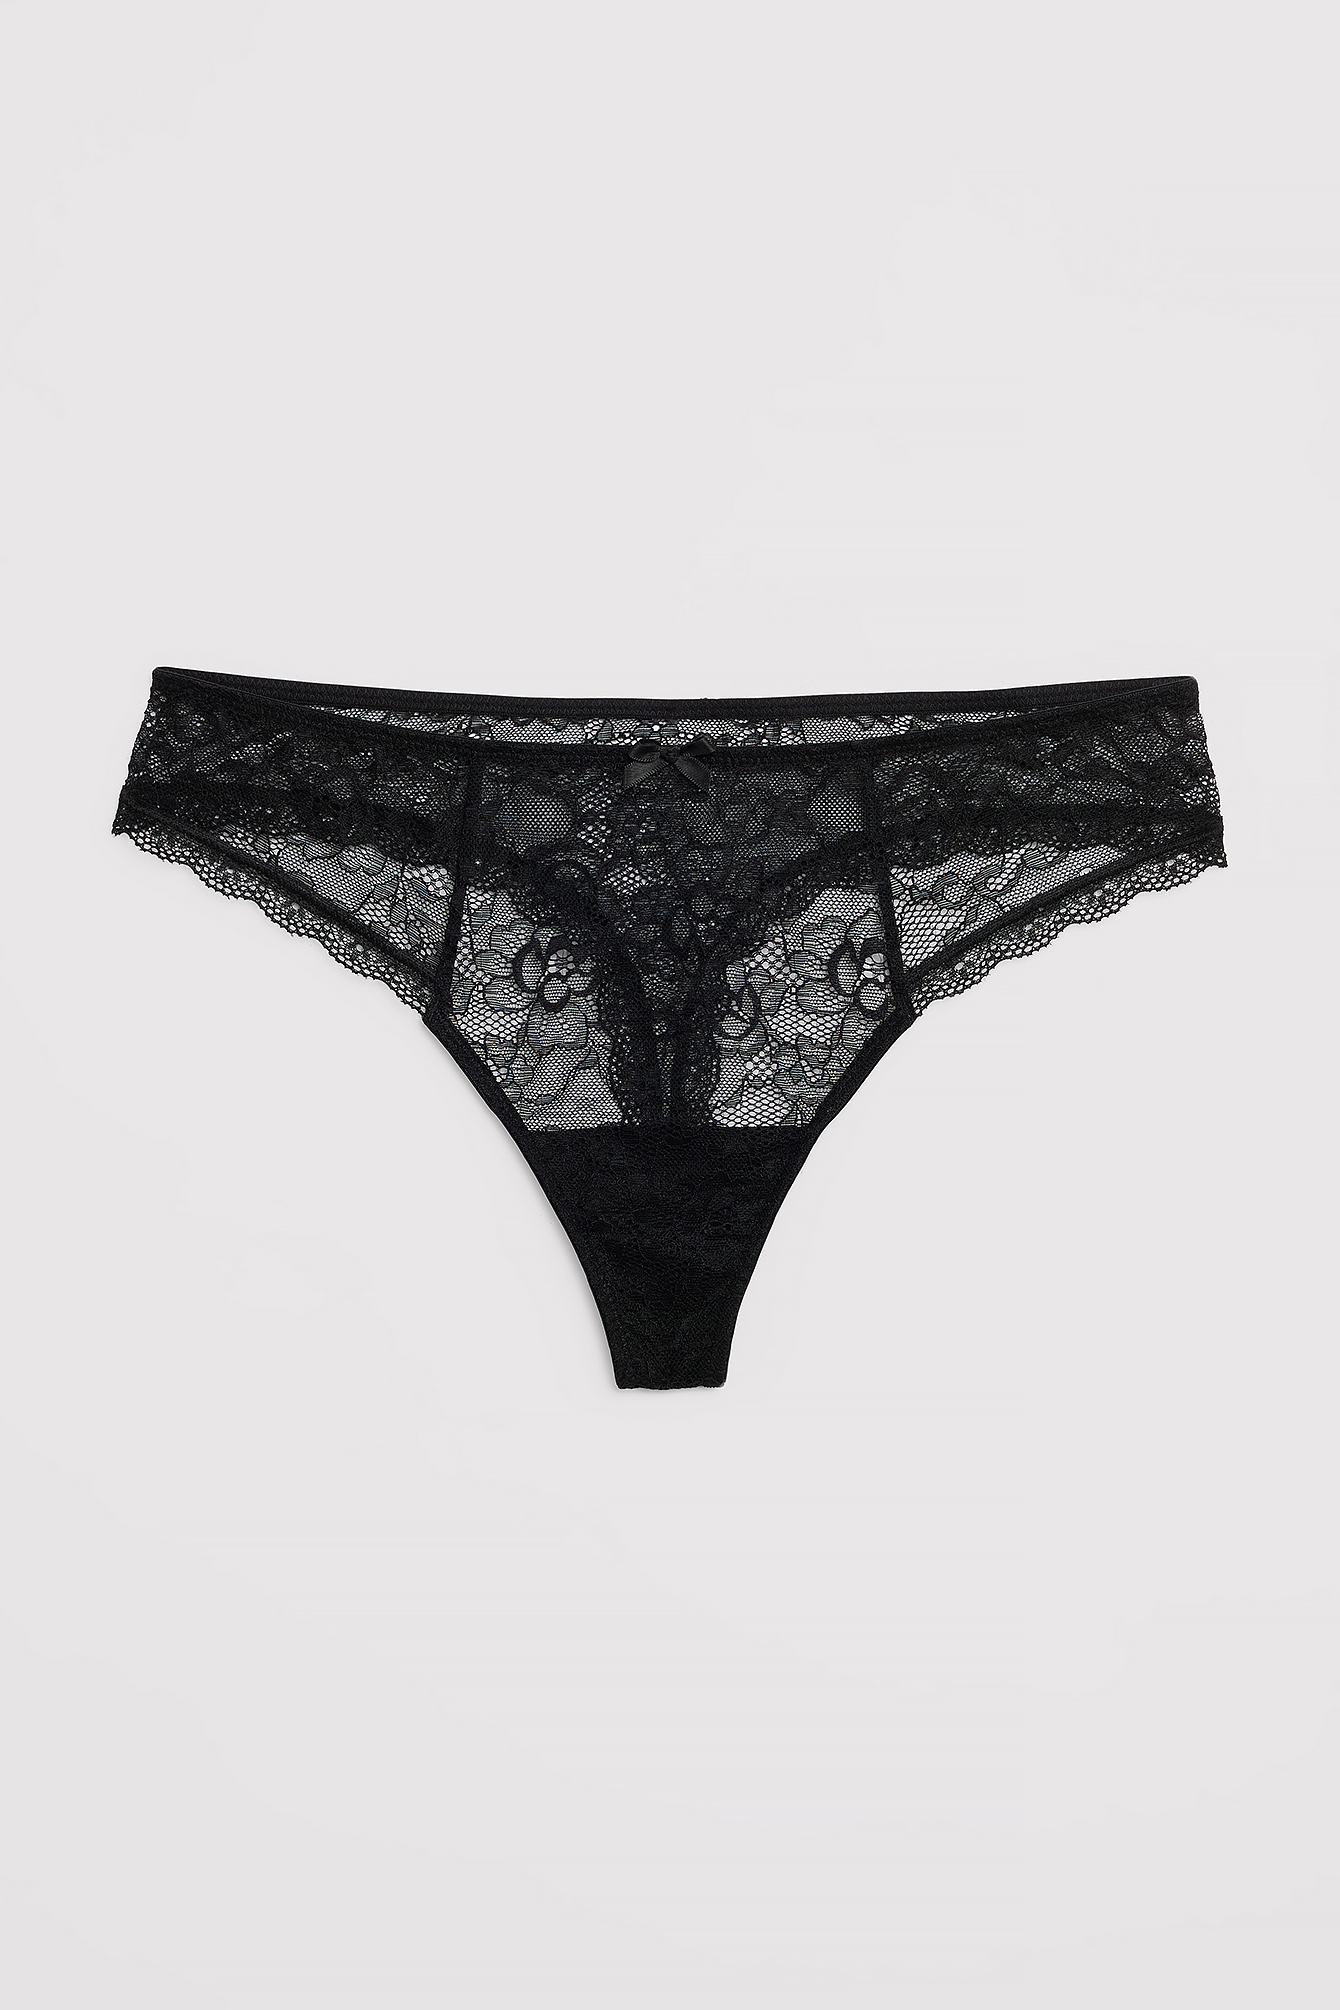 Cat Bra Briefs Collar Set Lingerie Underwear (Bell Choker+Top+Panties) BK S  : : Clothing, Shoes & Accessories